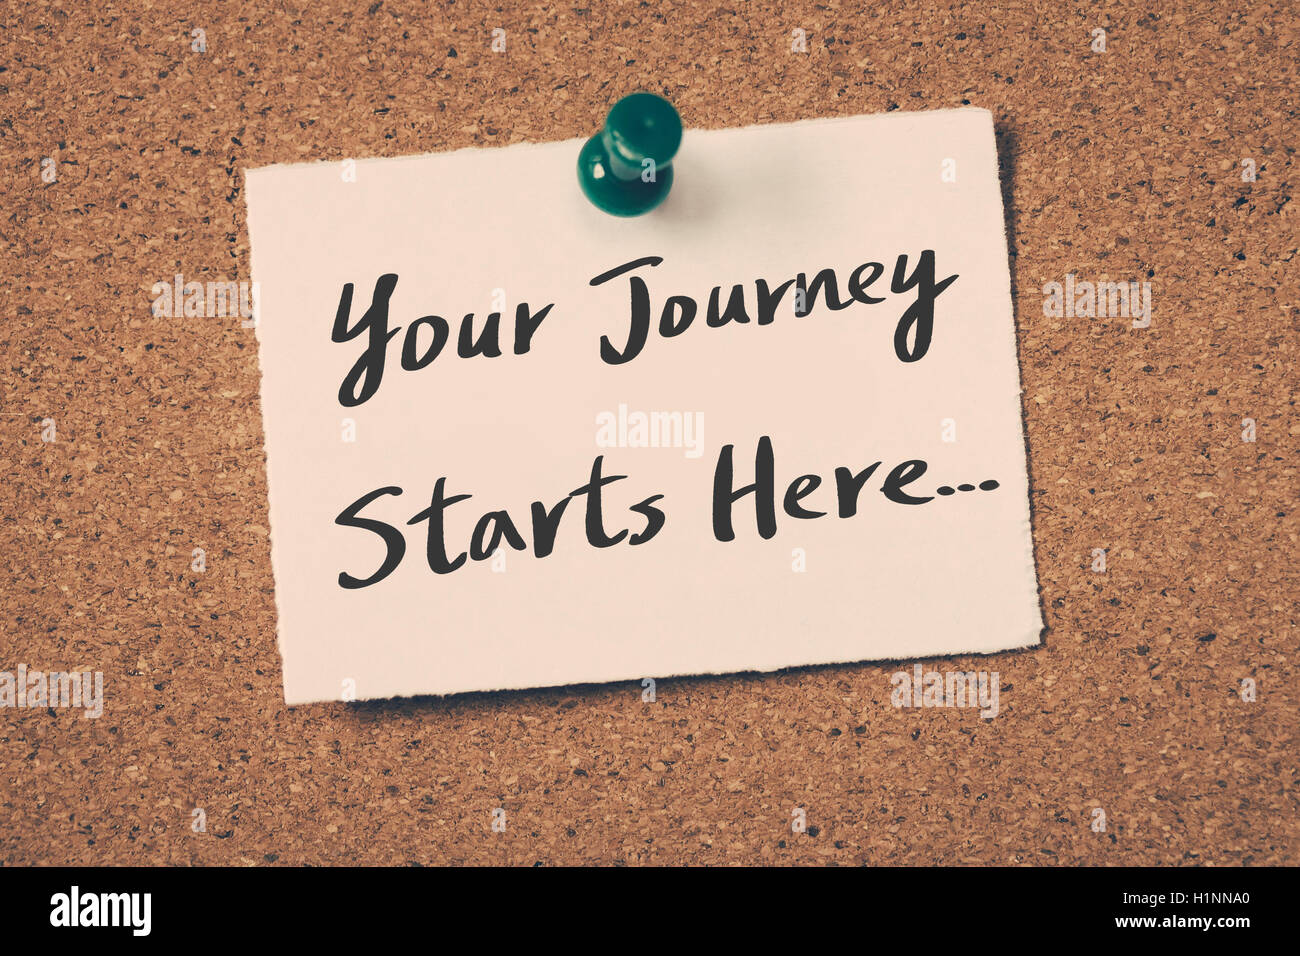 Start your journey. Путешествие начинается здесь. The Journey starts here. Start a Journey.